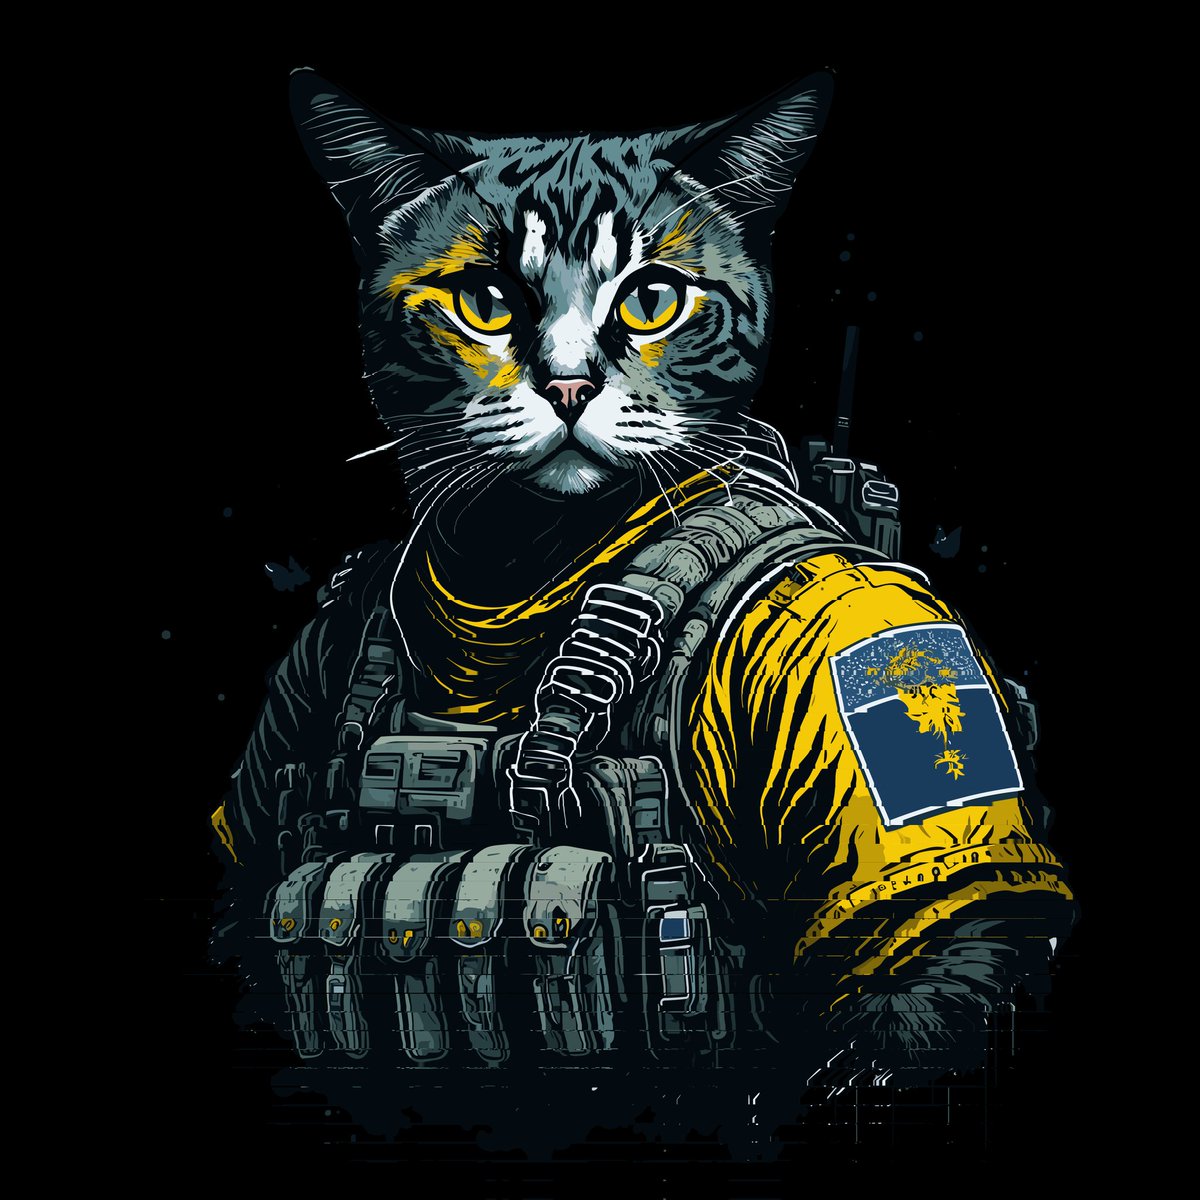 brave ukrainian soldier cat, freedom for #ukraine, #freedom
You can get the shirt here 👇
teepublic.com/t-shirt/510195…
.
.
.
#OnlyFriendsSeriesEP8 #MUNCRY #BLEACH_anime #SixTONESANN #notylc #UkraineRussiaWar️️ #RussianWarCrimes #MEXC #RussiaIsANaziState #tshirt #desing #love #life